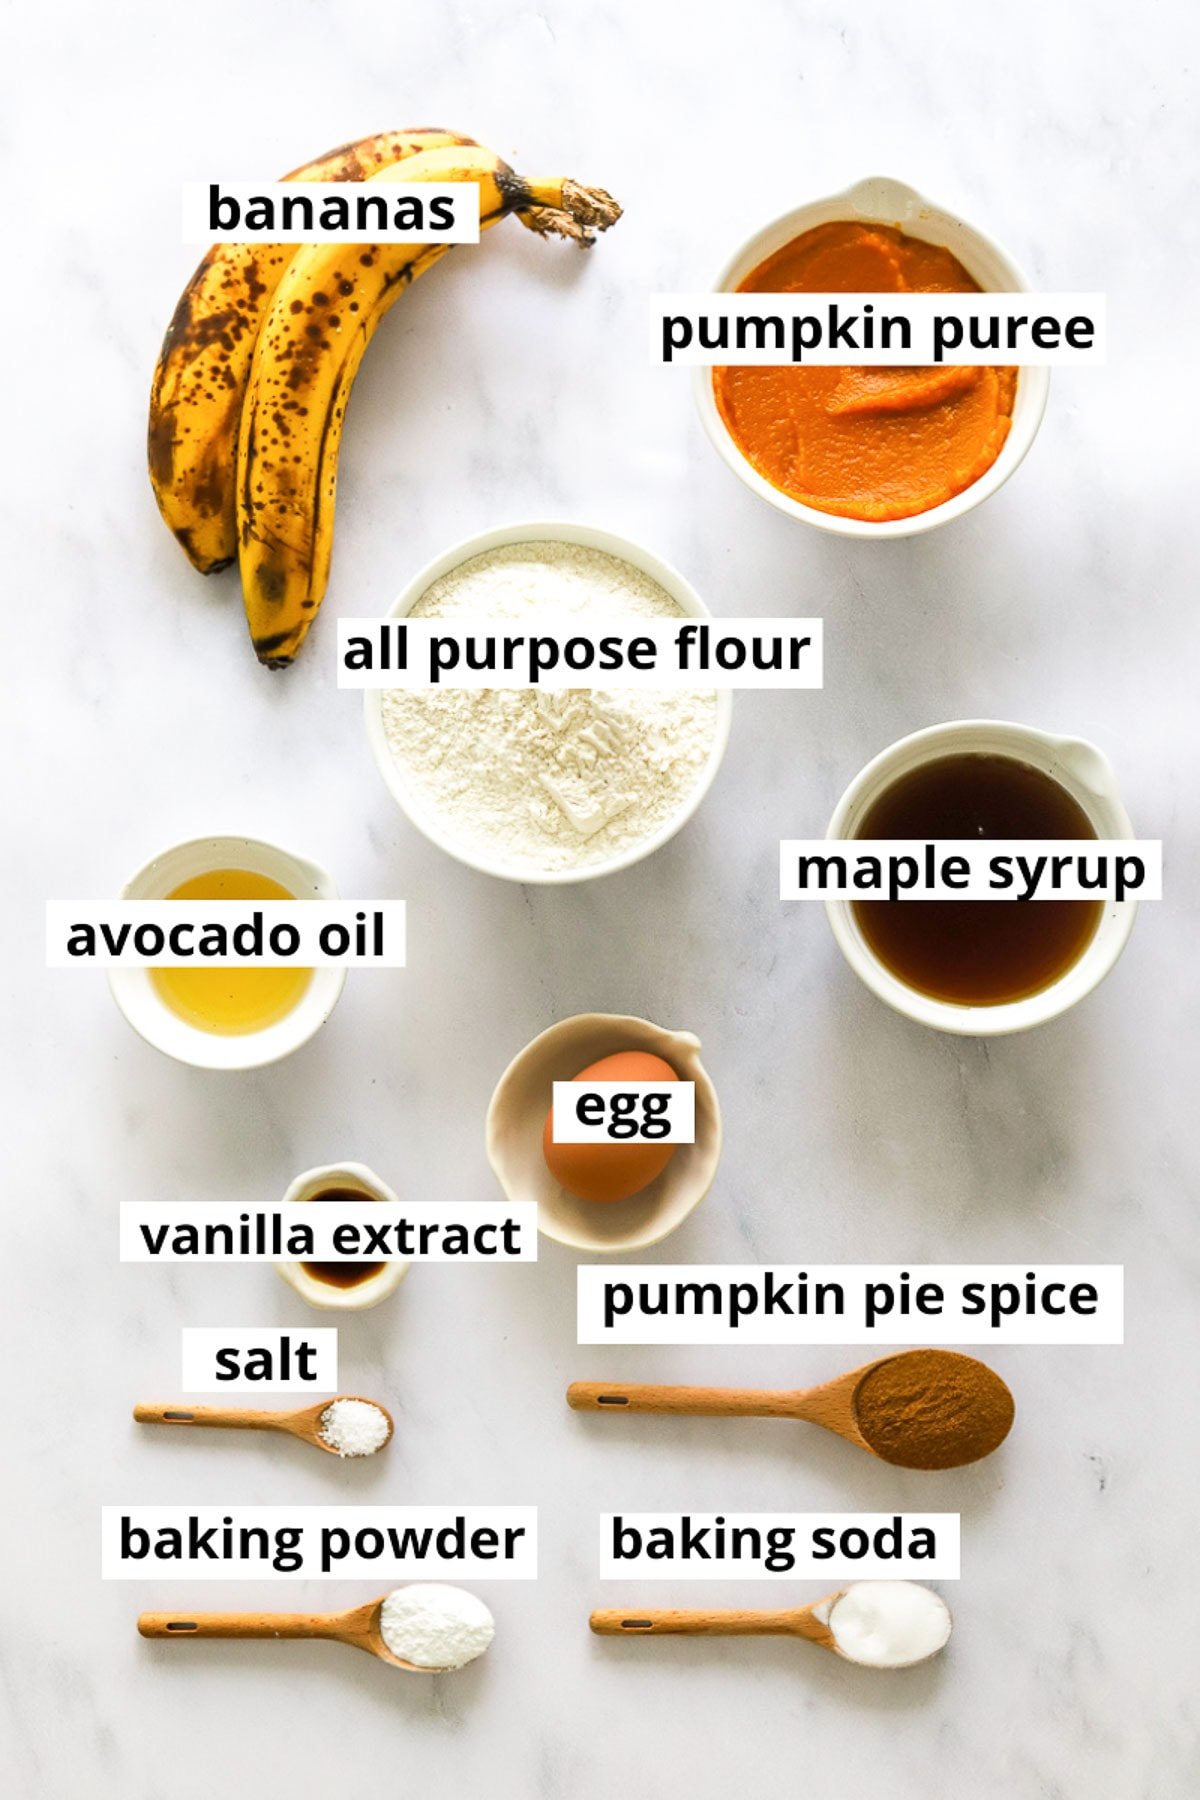 Bananas, pumpkin puree, oil, flour, maple syrup, egg, vanilla, salt, pumpkin pie spice, baking powder, baking soda.